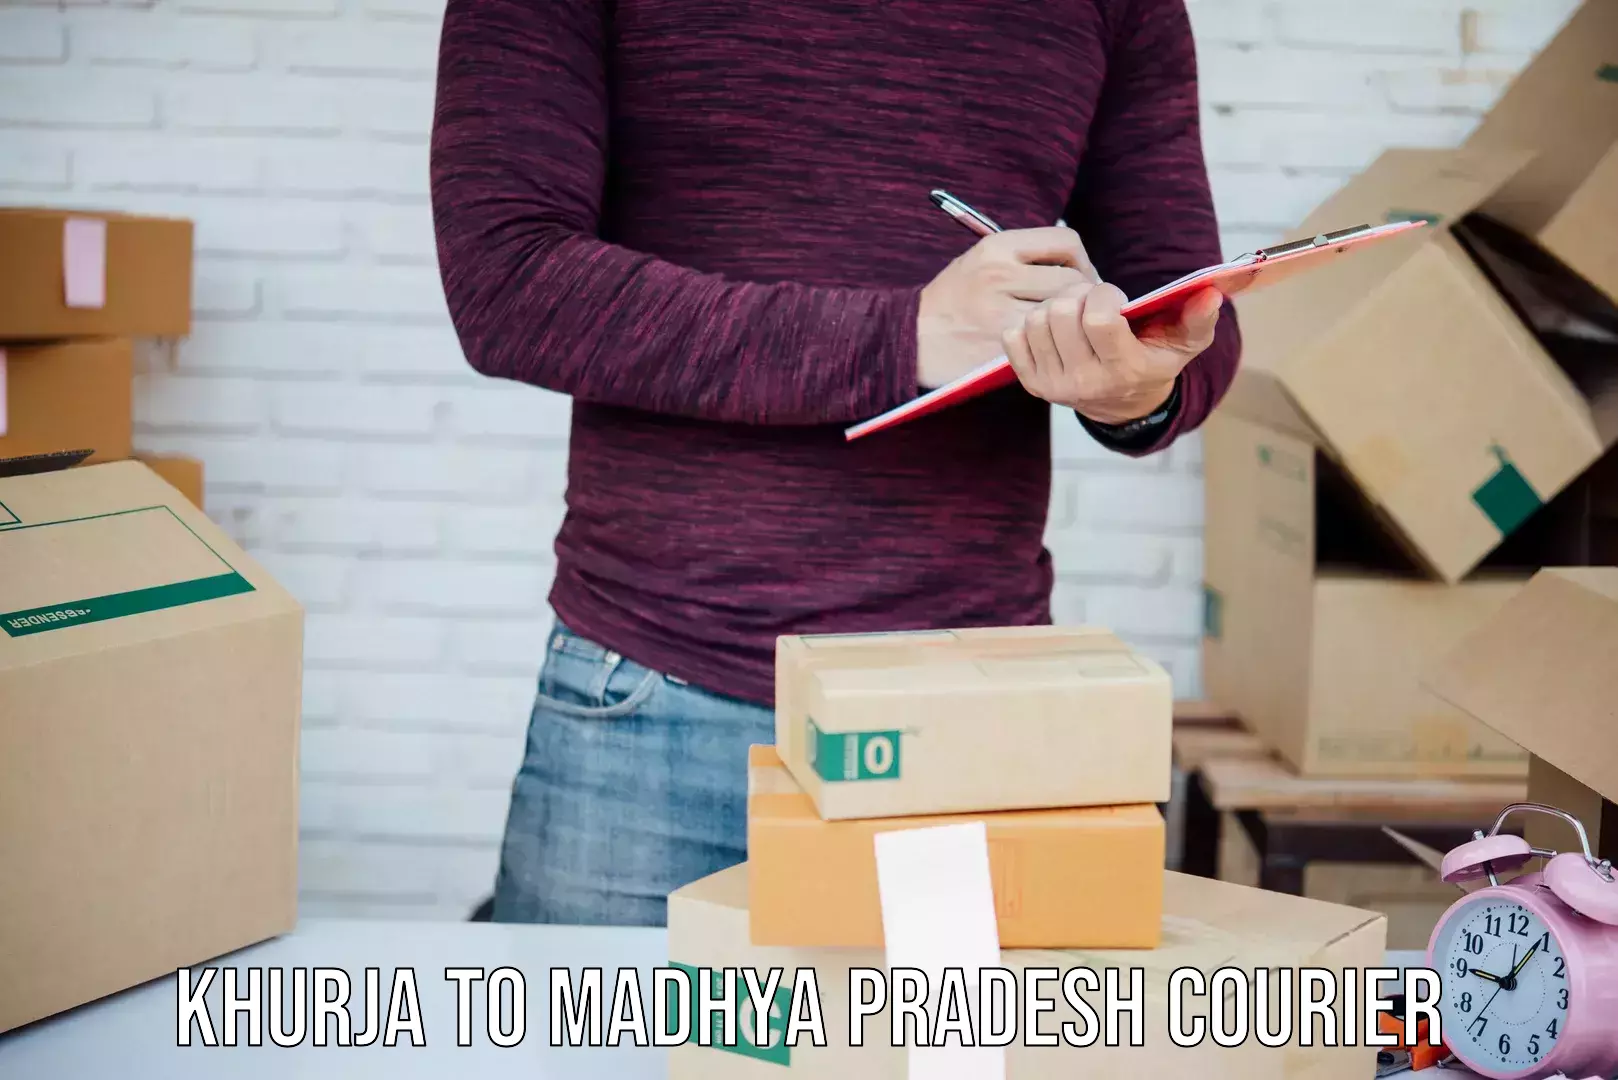 State-of-the-art courier technology Khurja to Vidisha